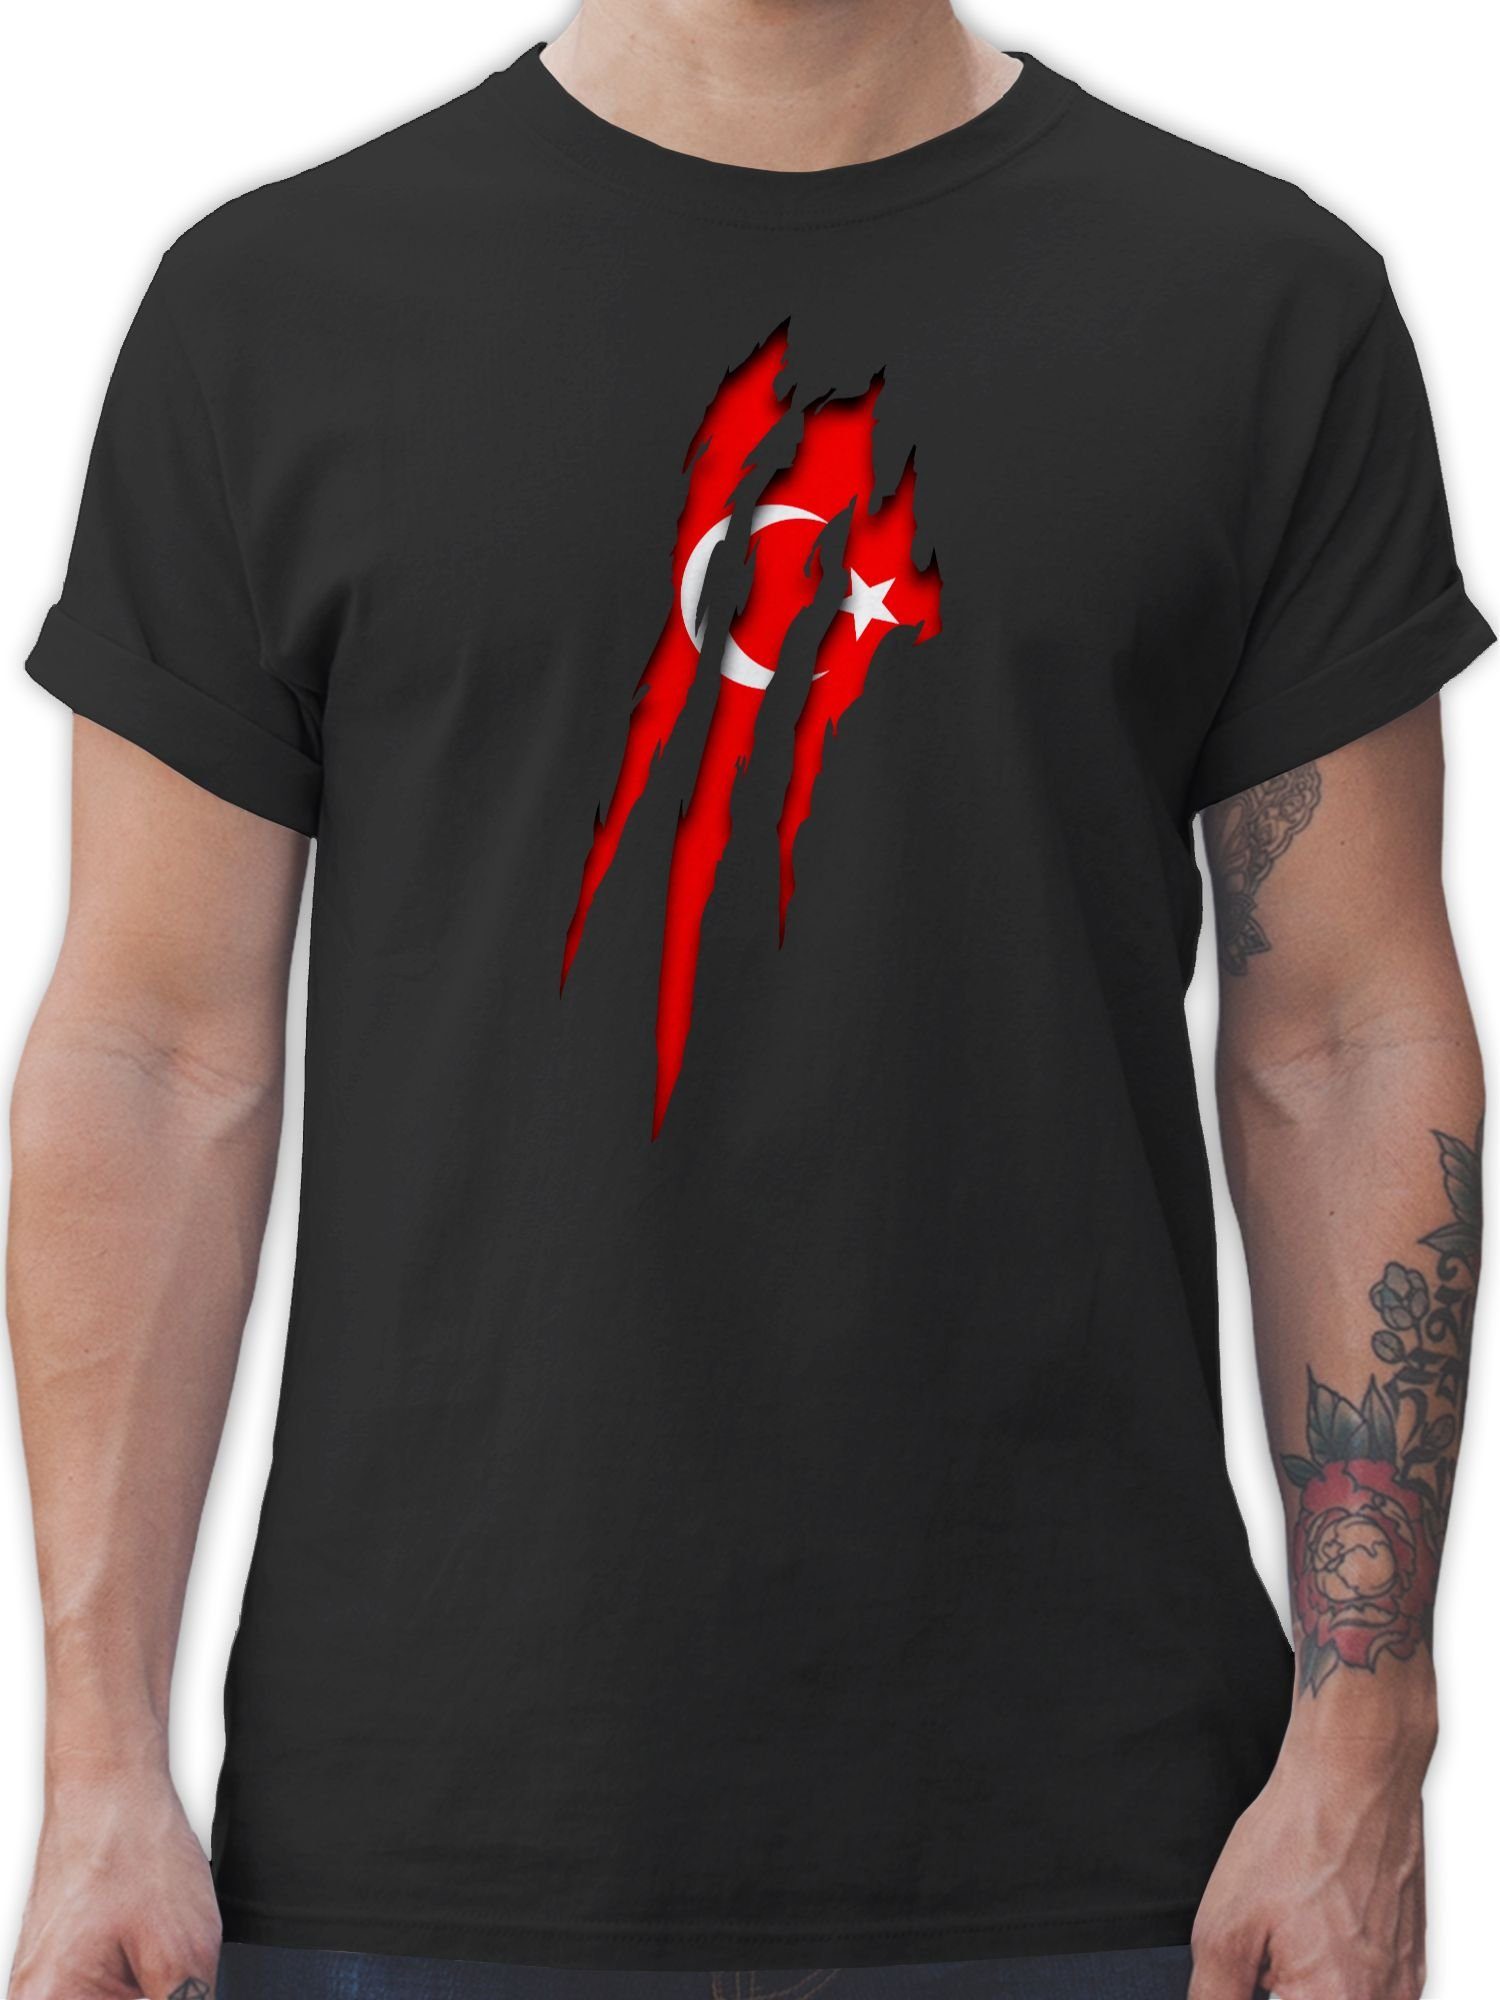 Shirtracer T-Shirt Türkei Krallenspuren Länder Wappen 01 Schwarz